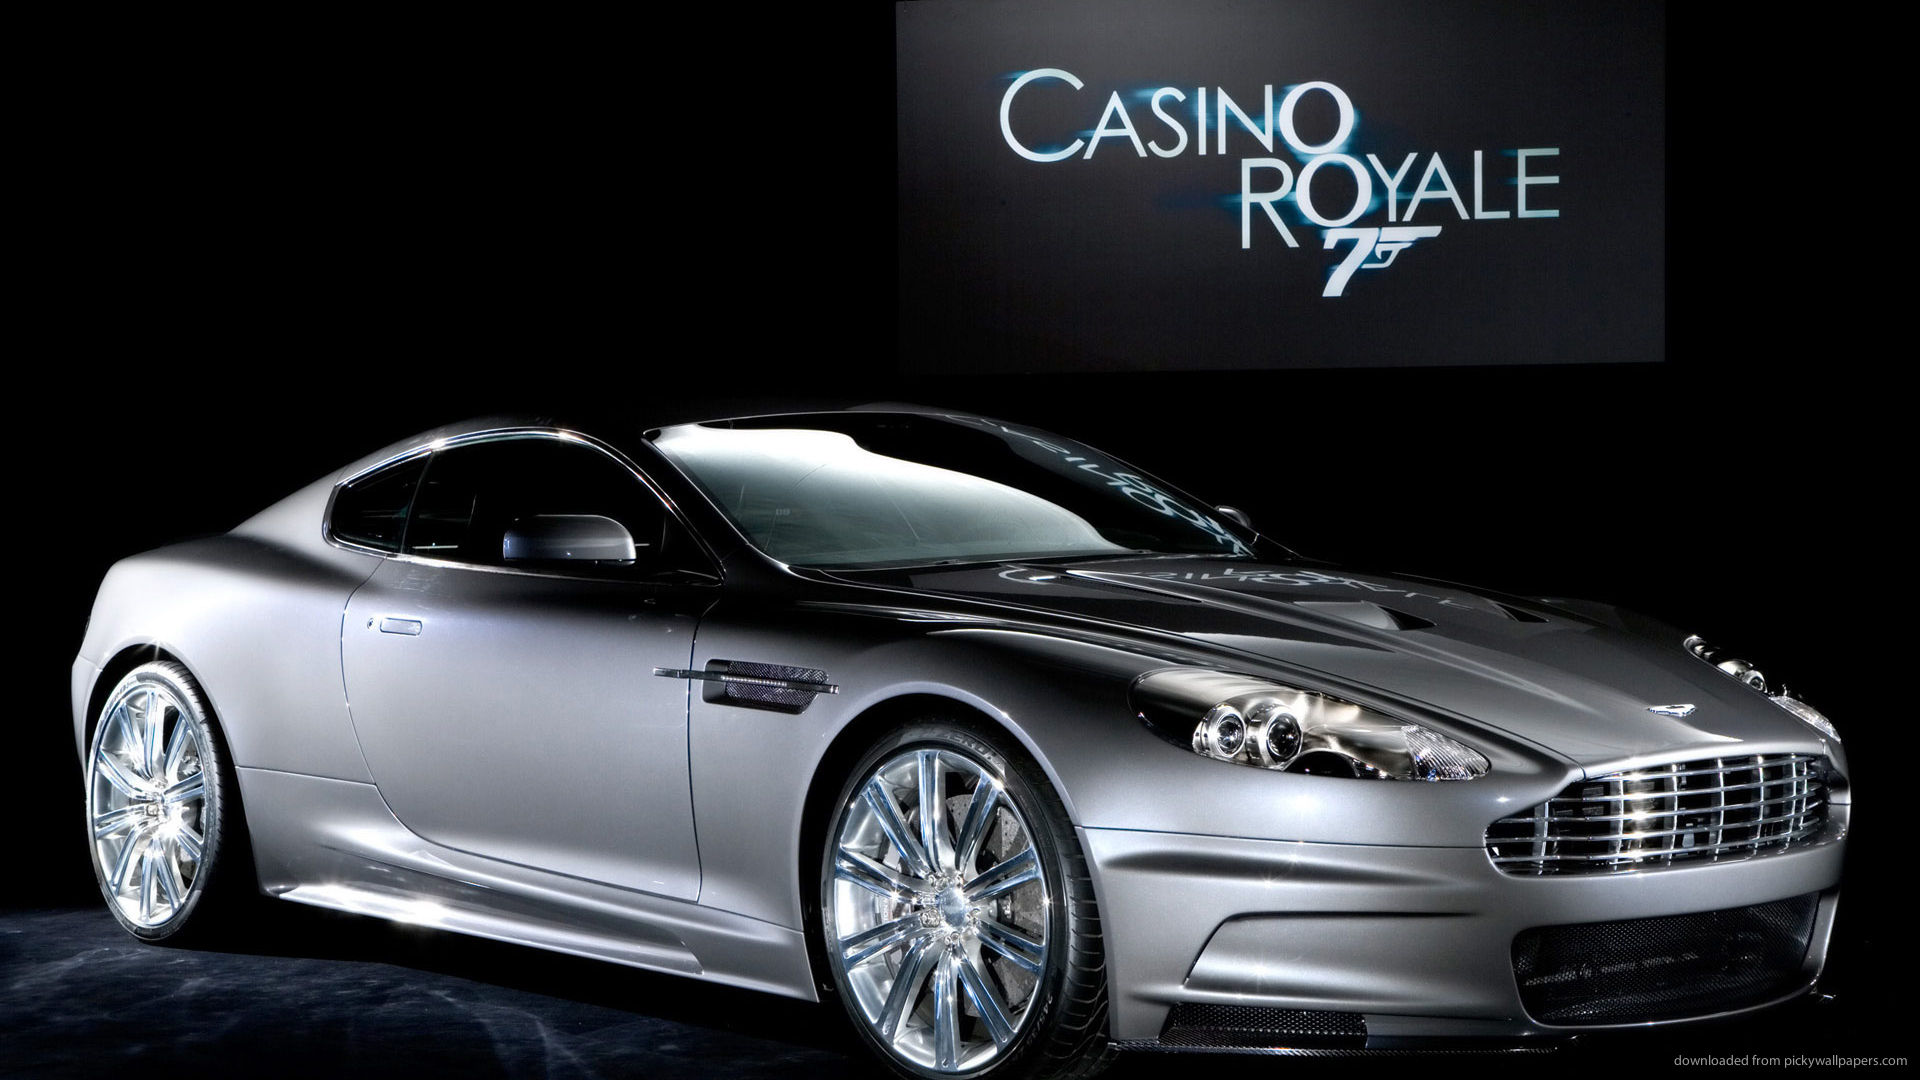 Aston Martin Dbs Casino Royale Wallpaper